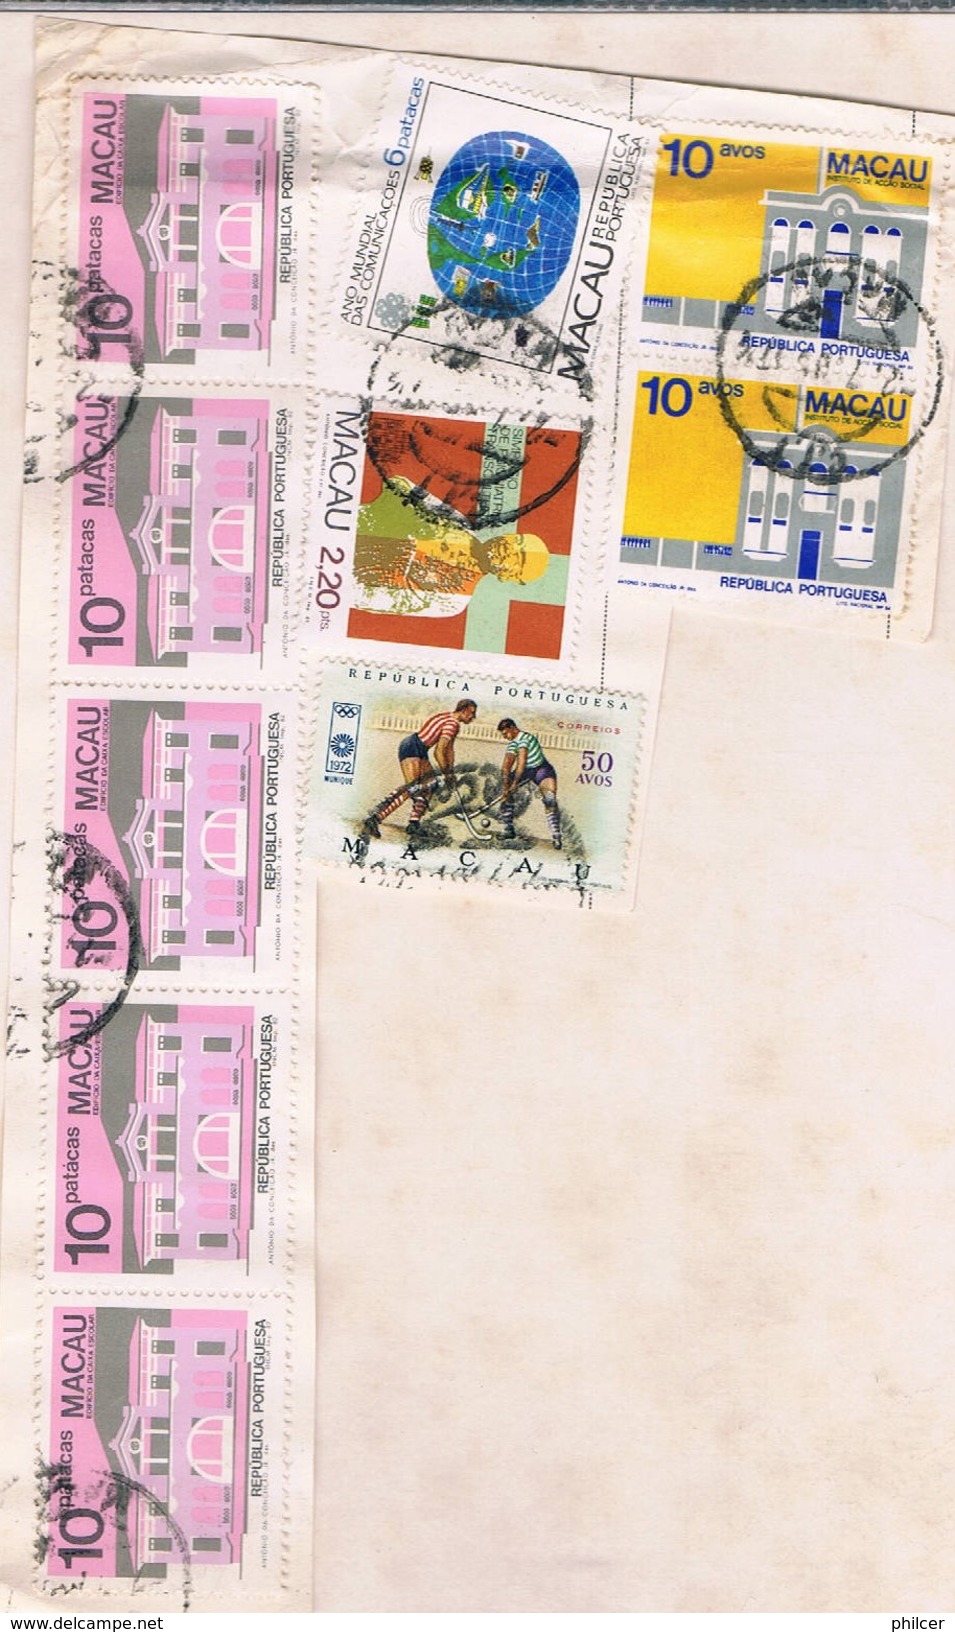 Macau, 1985, # 429, 459, 464, 473, 474, Fragmento, Used - Used Stamps